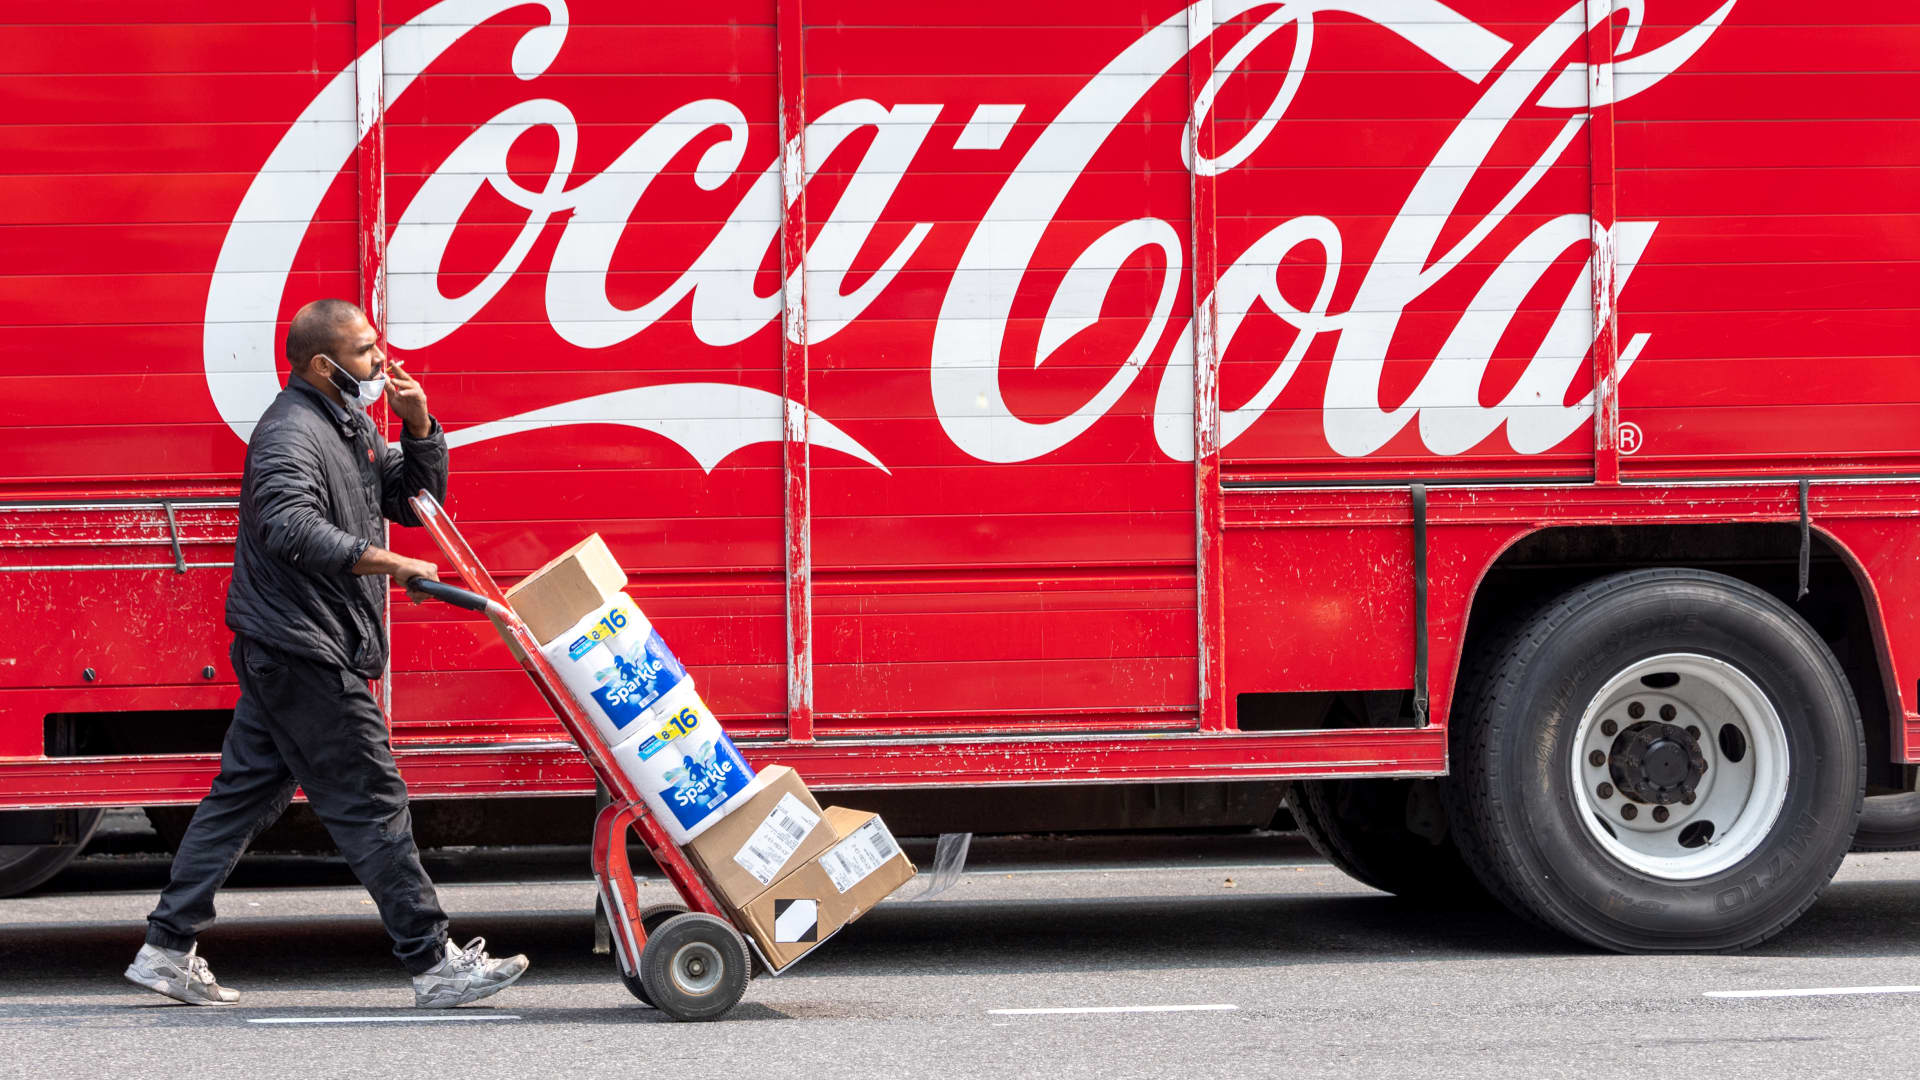 Coca-Cola (KO) Q3 2022 earnings